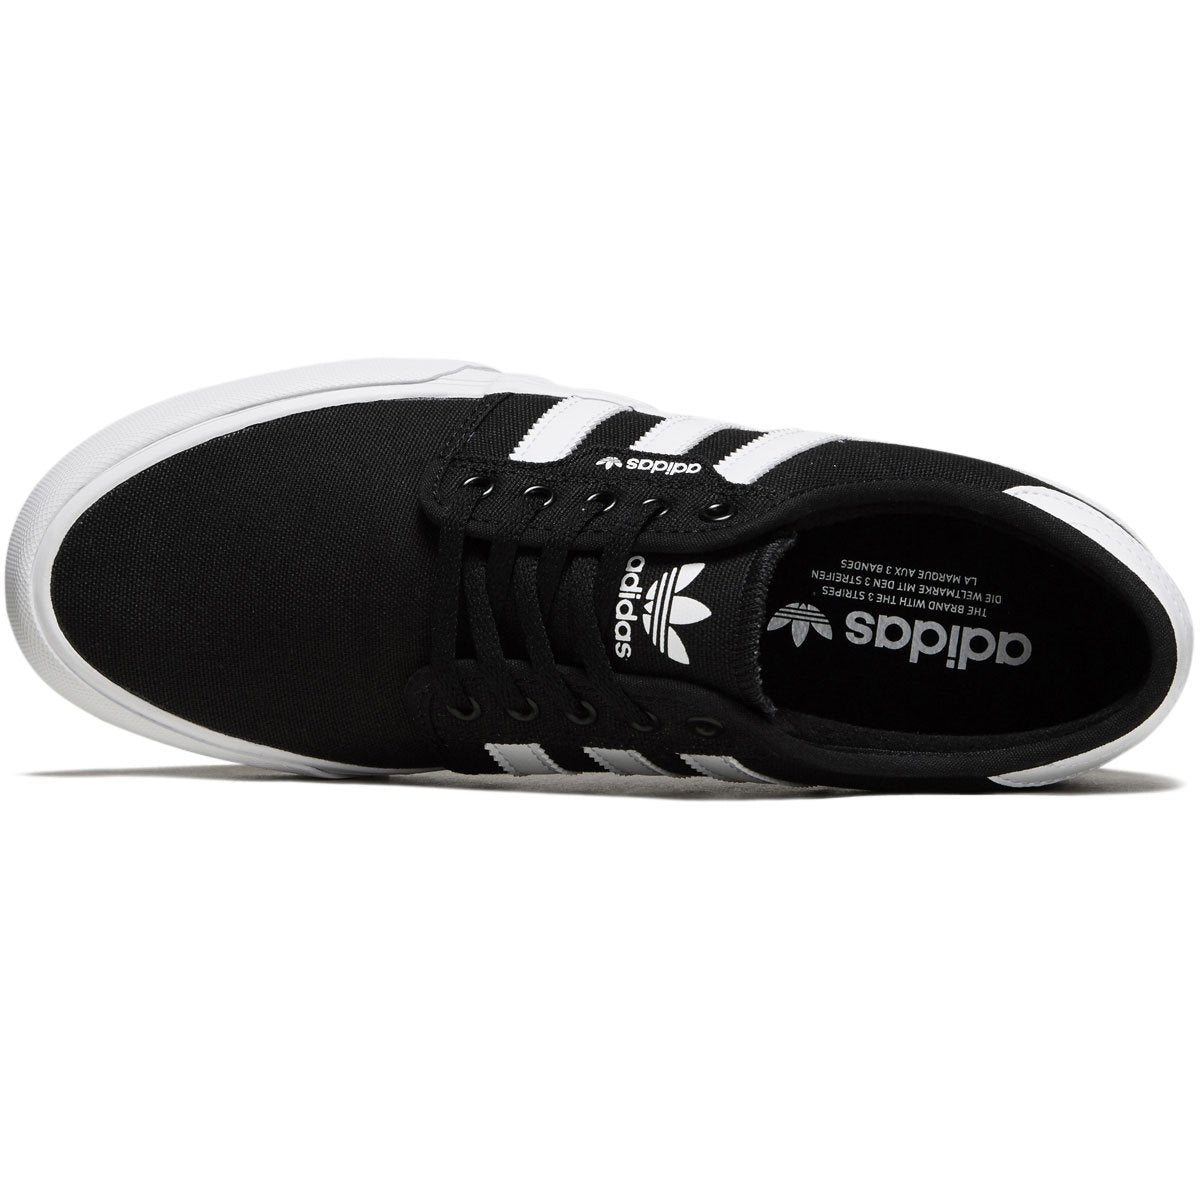 Adidas Seeley Xt Shoes - Core Black/White/White – Daddies Board Shop